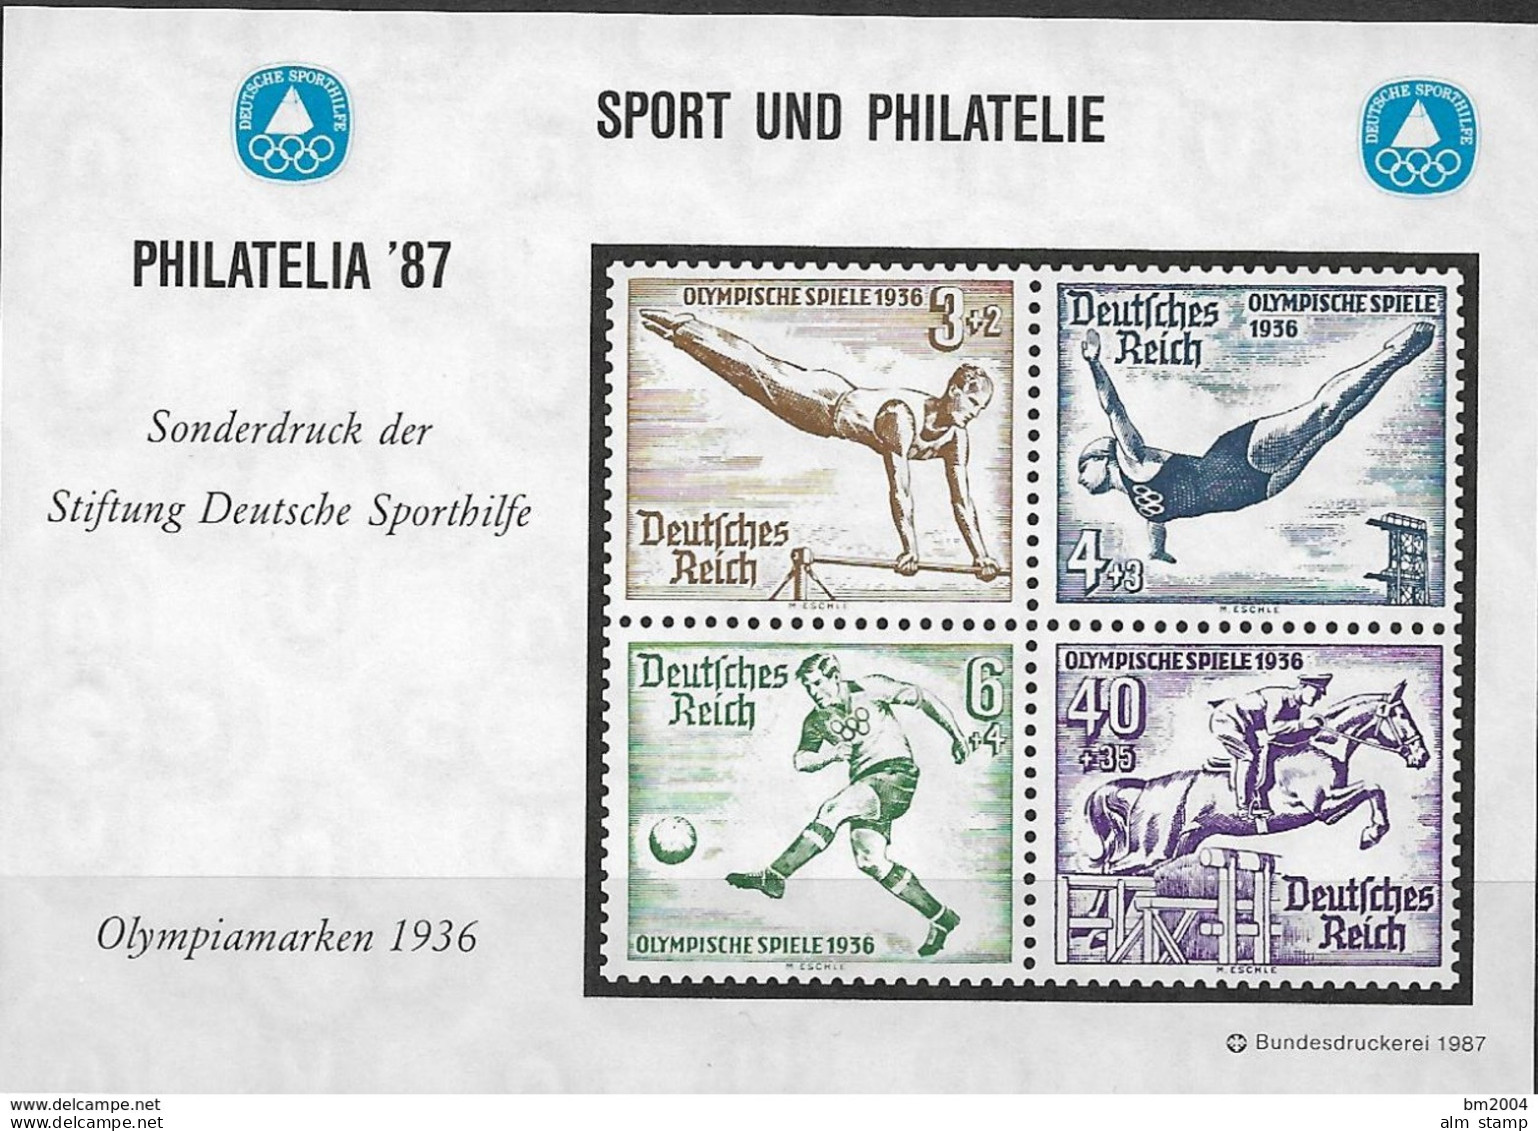 1987 Deutschland Vignette  PHILATELIA '87  " OLYMPIAMARKEN 1936 - Zomer 1936: Berlijn